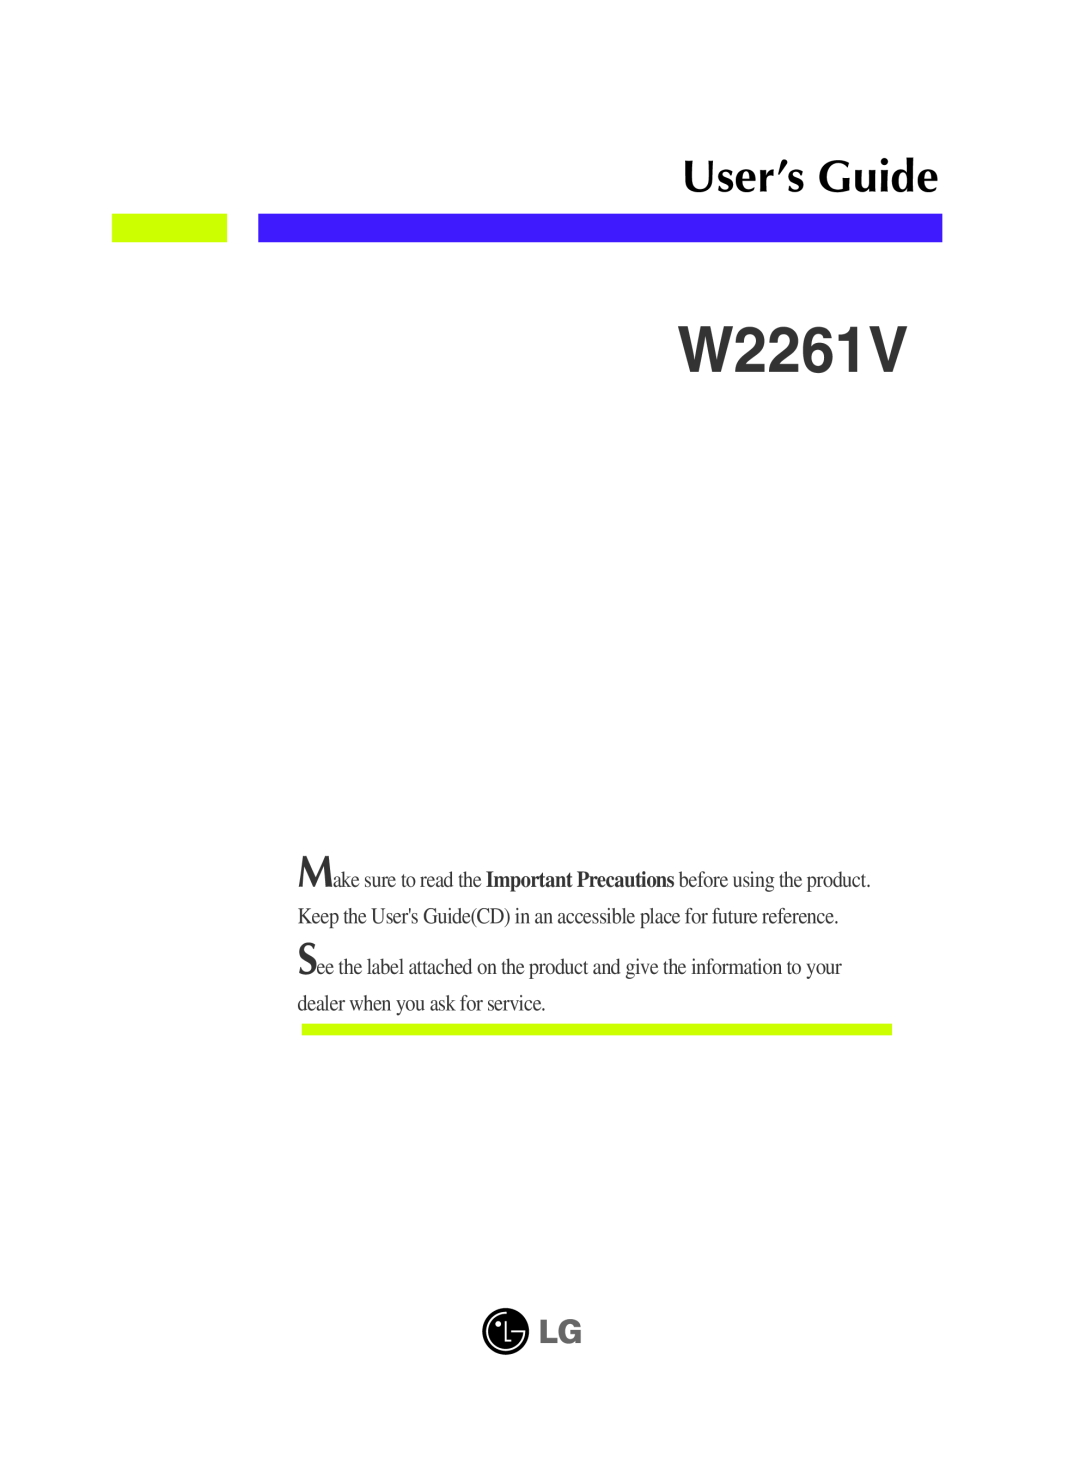 LG Electronics W2261V manual User’s Guide 